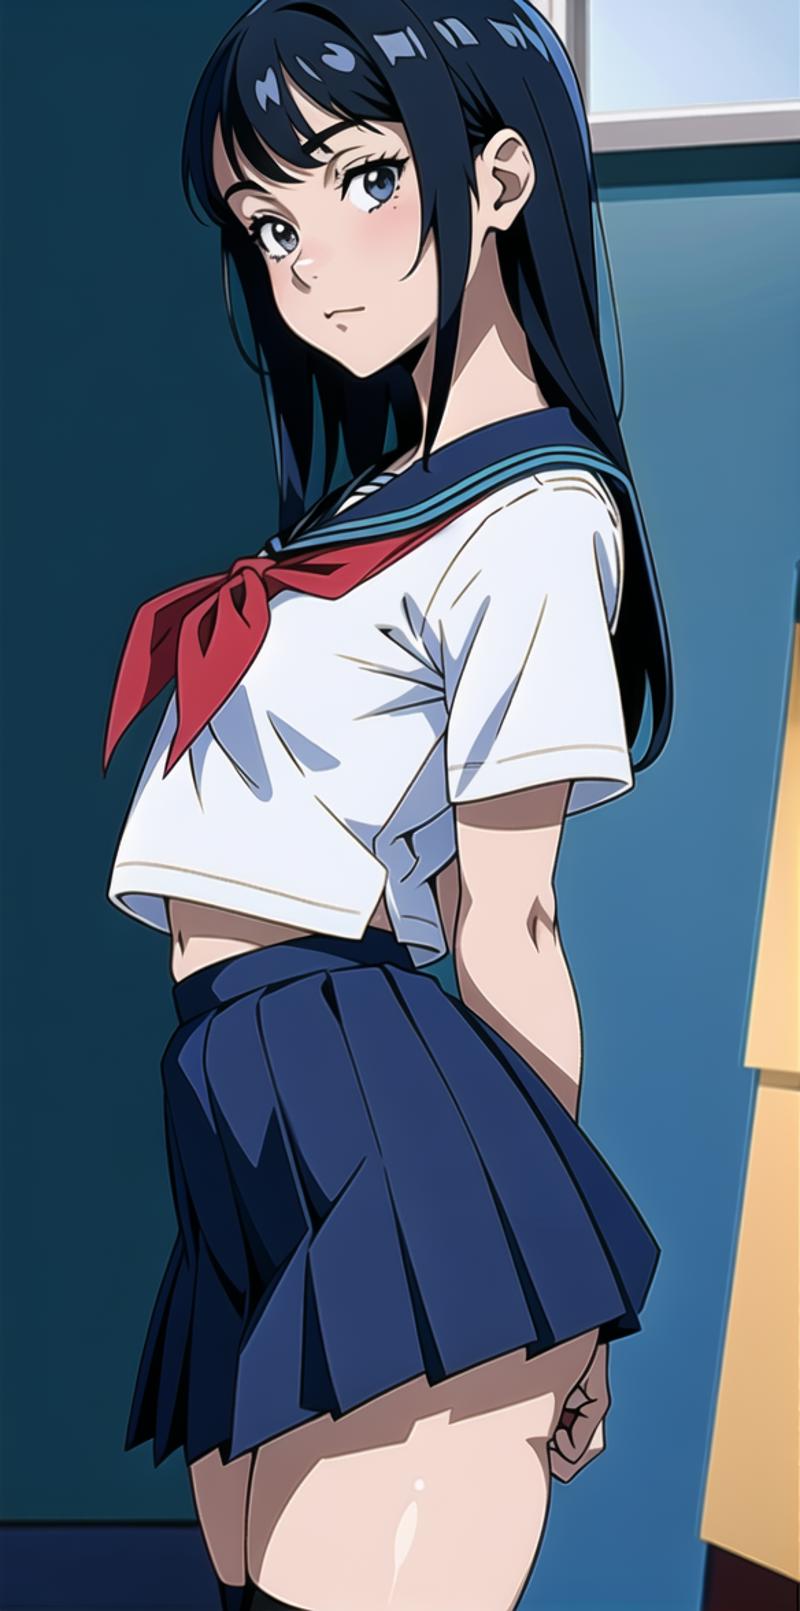 Mistoon_Anime school uniform image by sleepbreaker